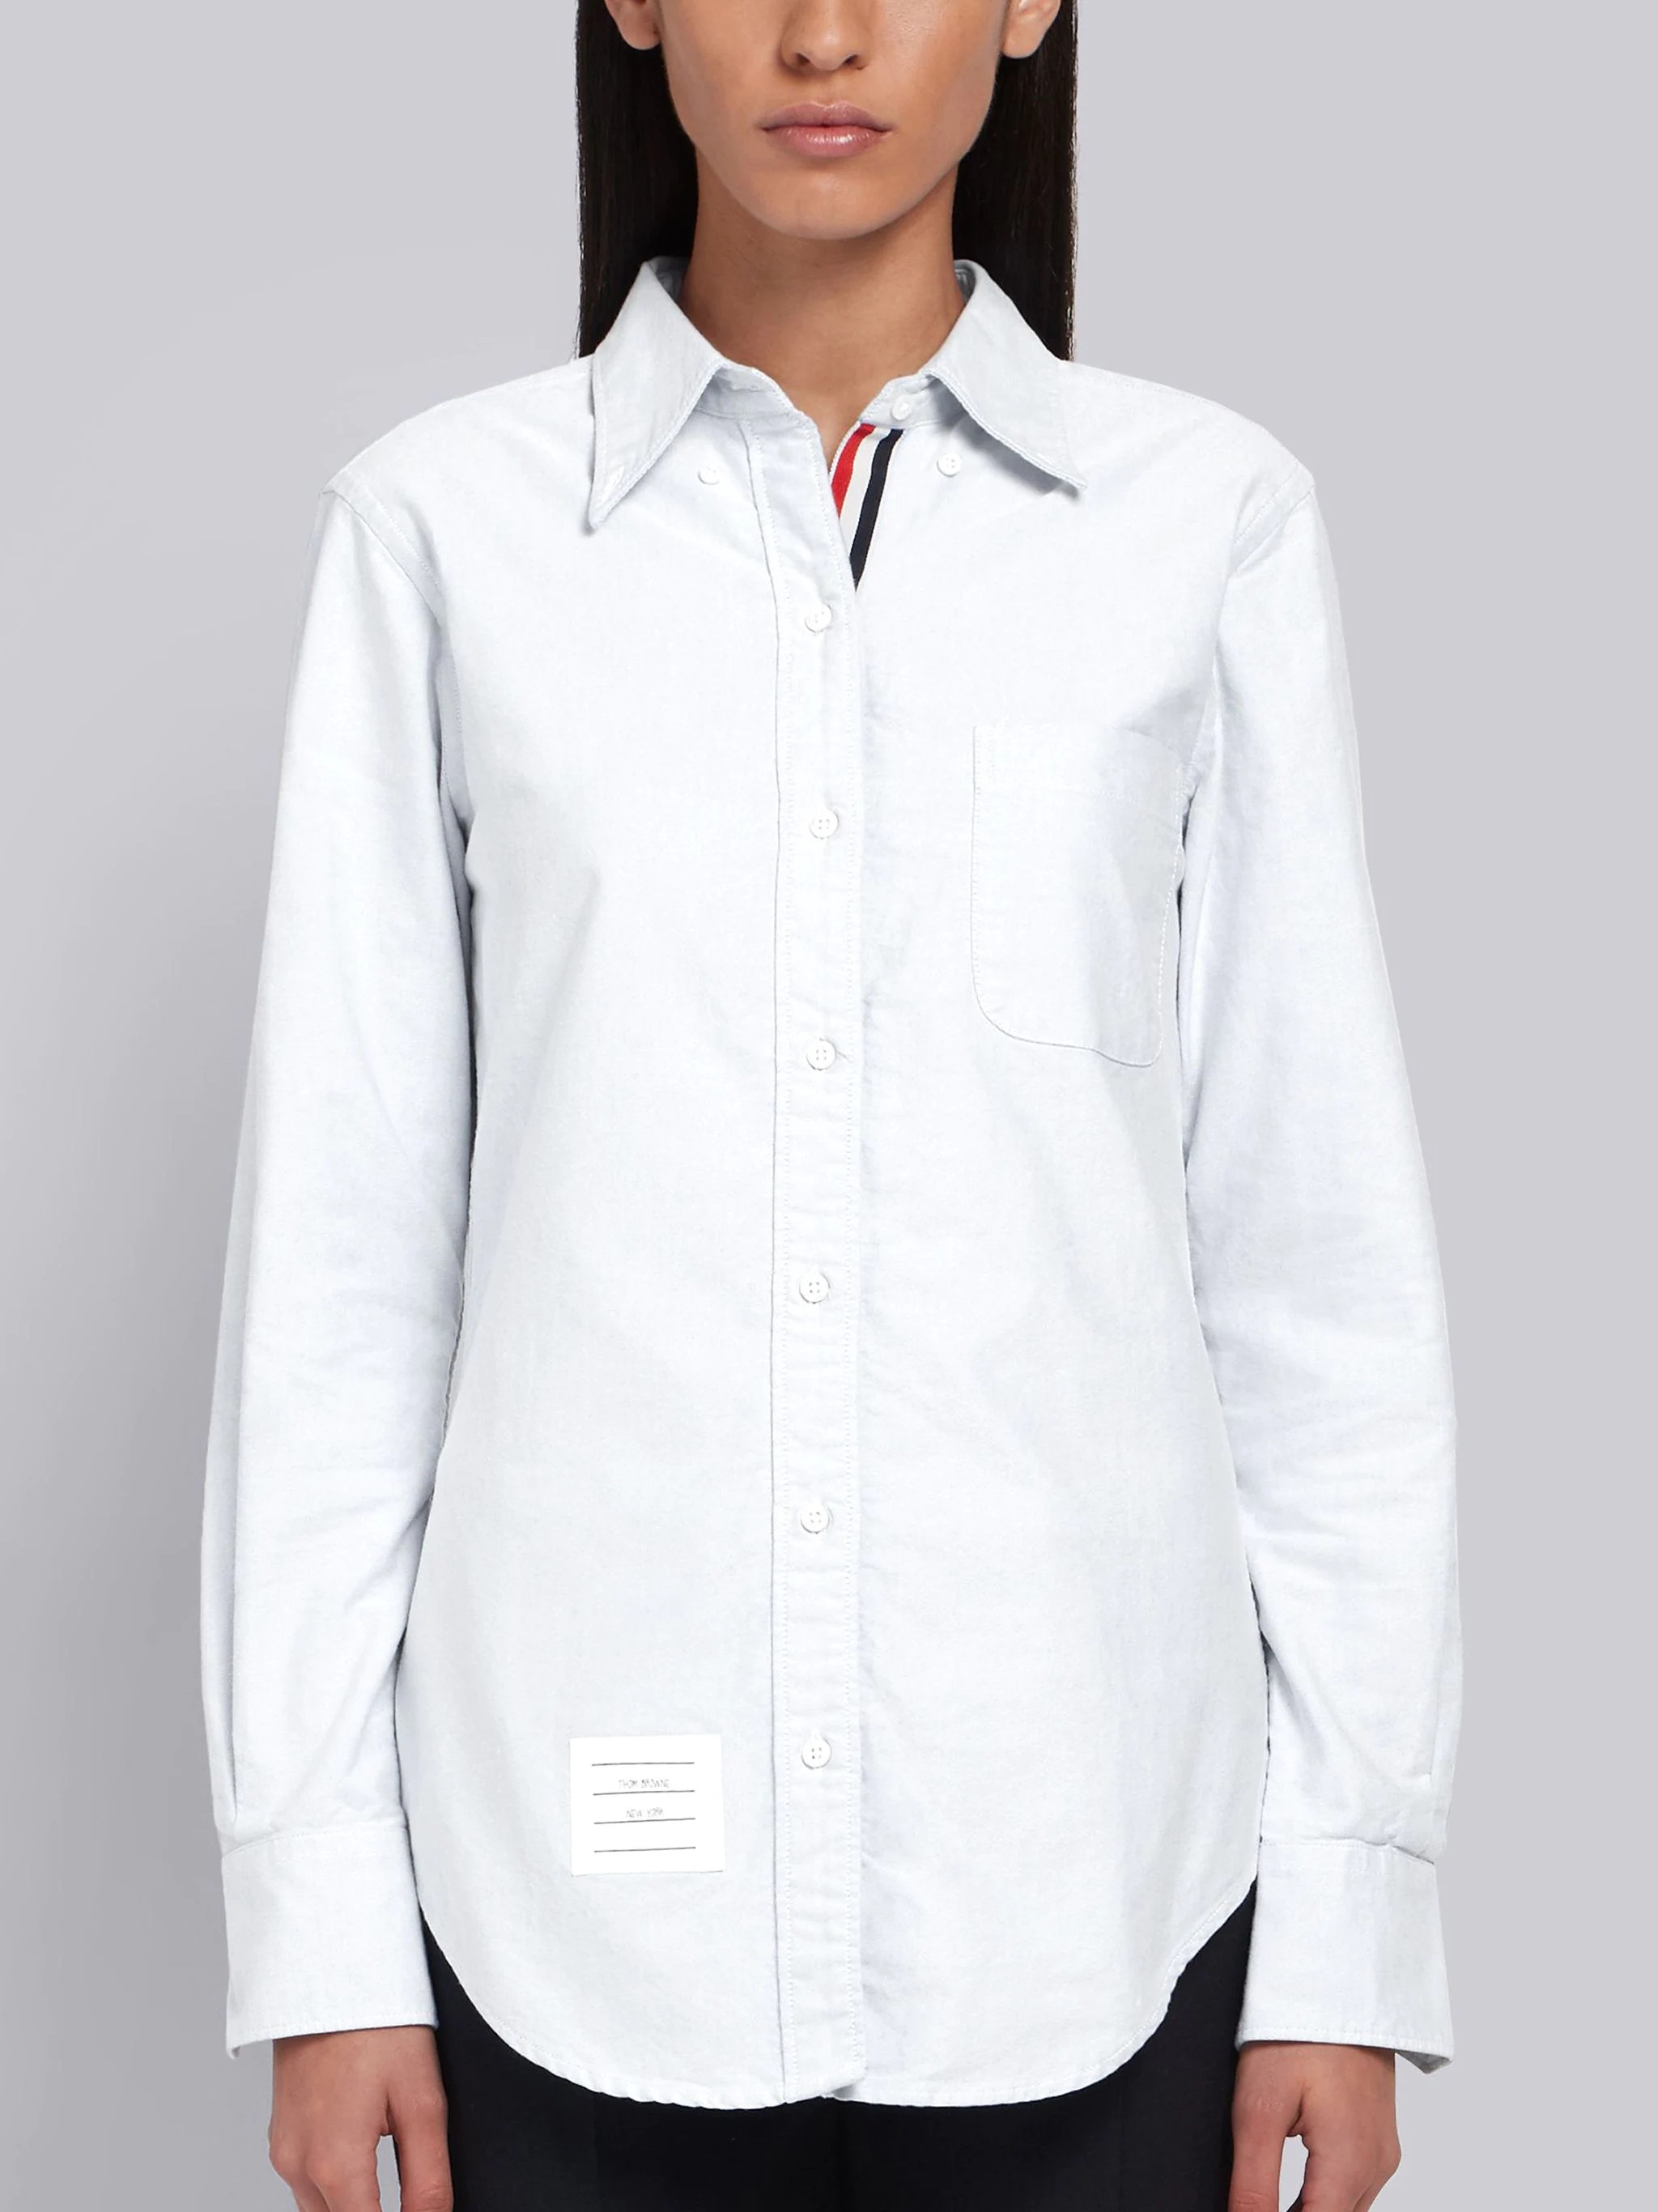 White Classic Oxford Grosgrain Placket Long Sleeve Shirt - 2